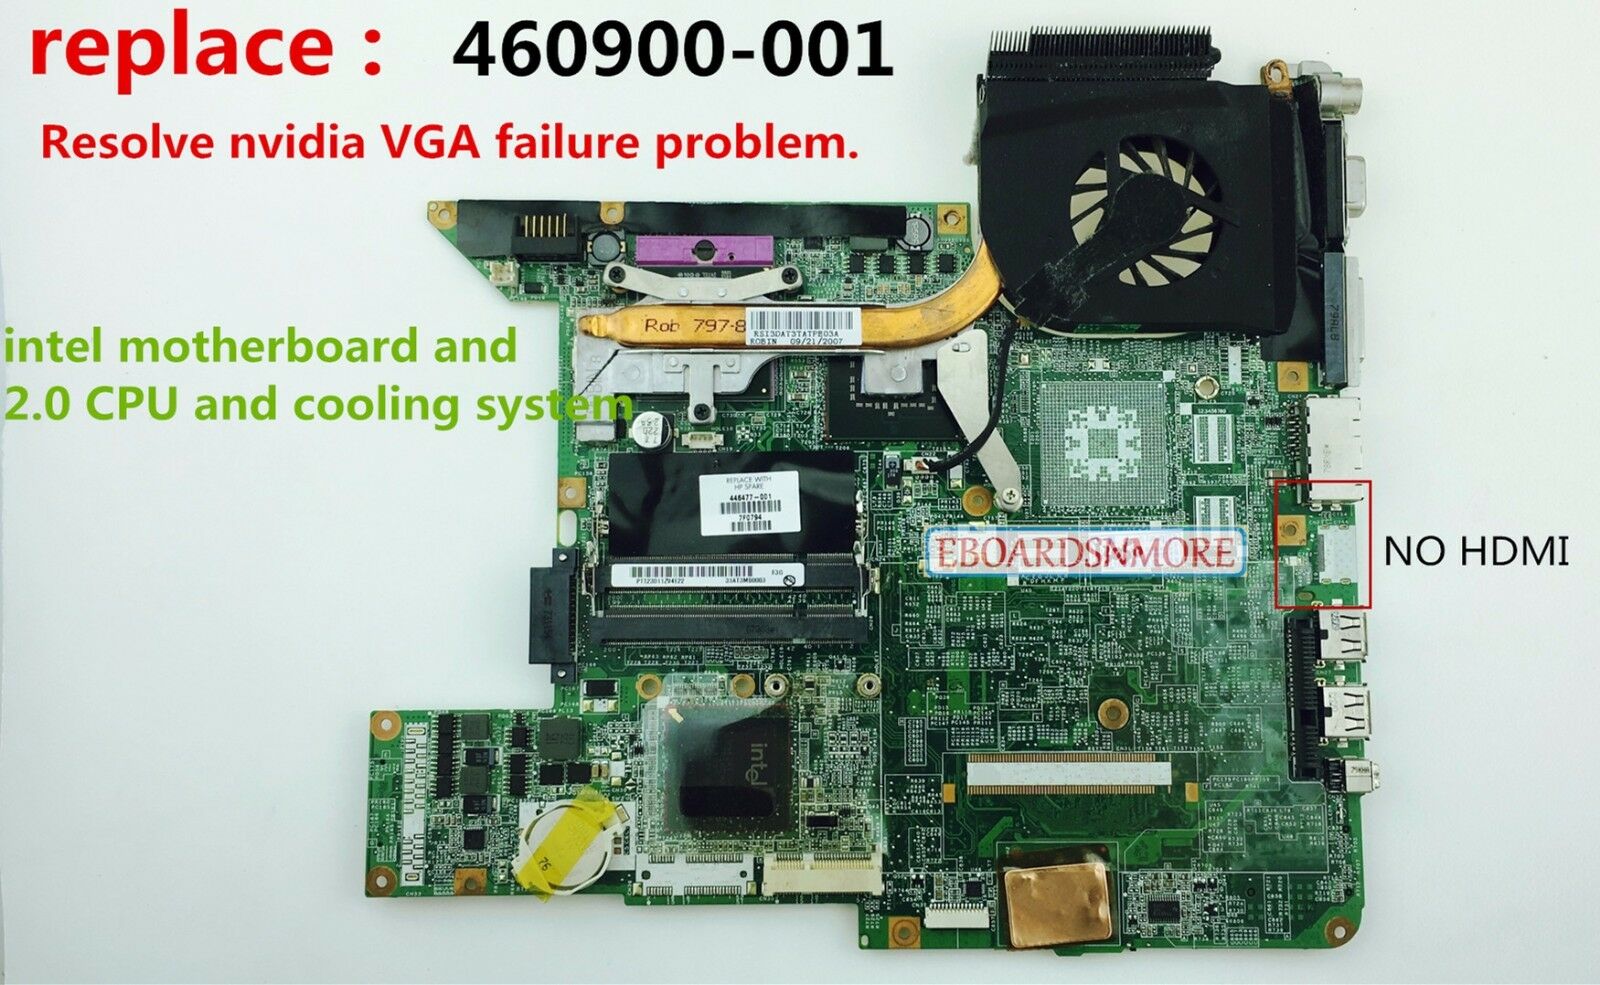 HP DV6000 DV6700 INTEL 965 Motherboard +cpu+heatsink, replaces AMD 460900-001, A Memory Type: See descripti